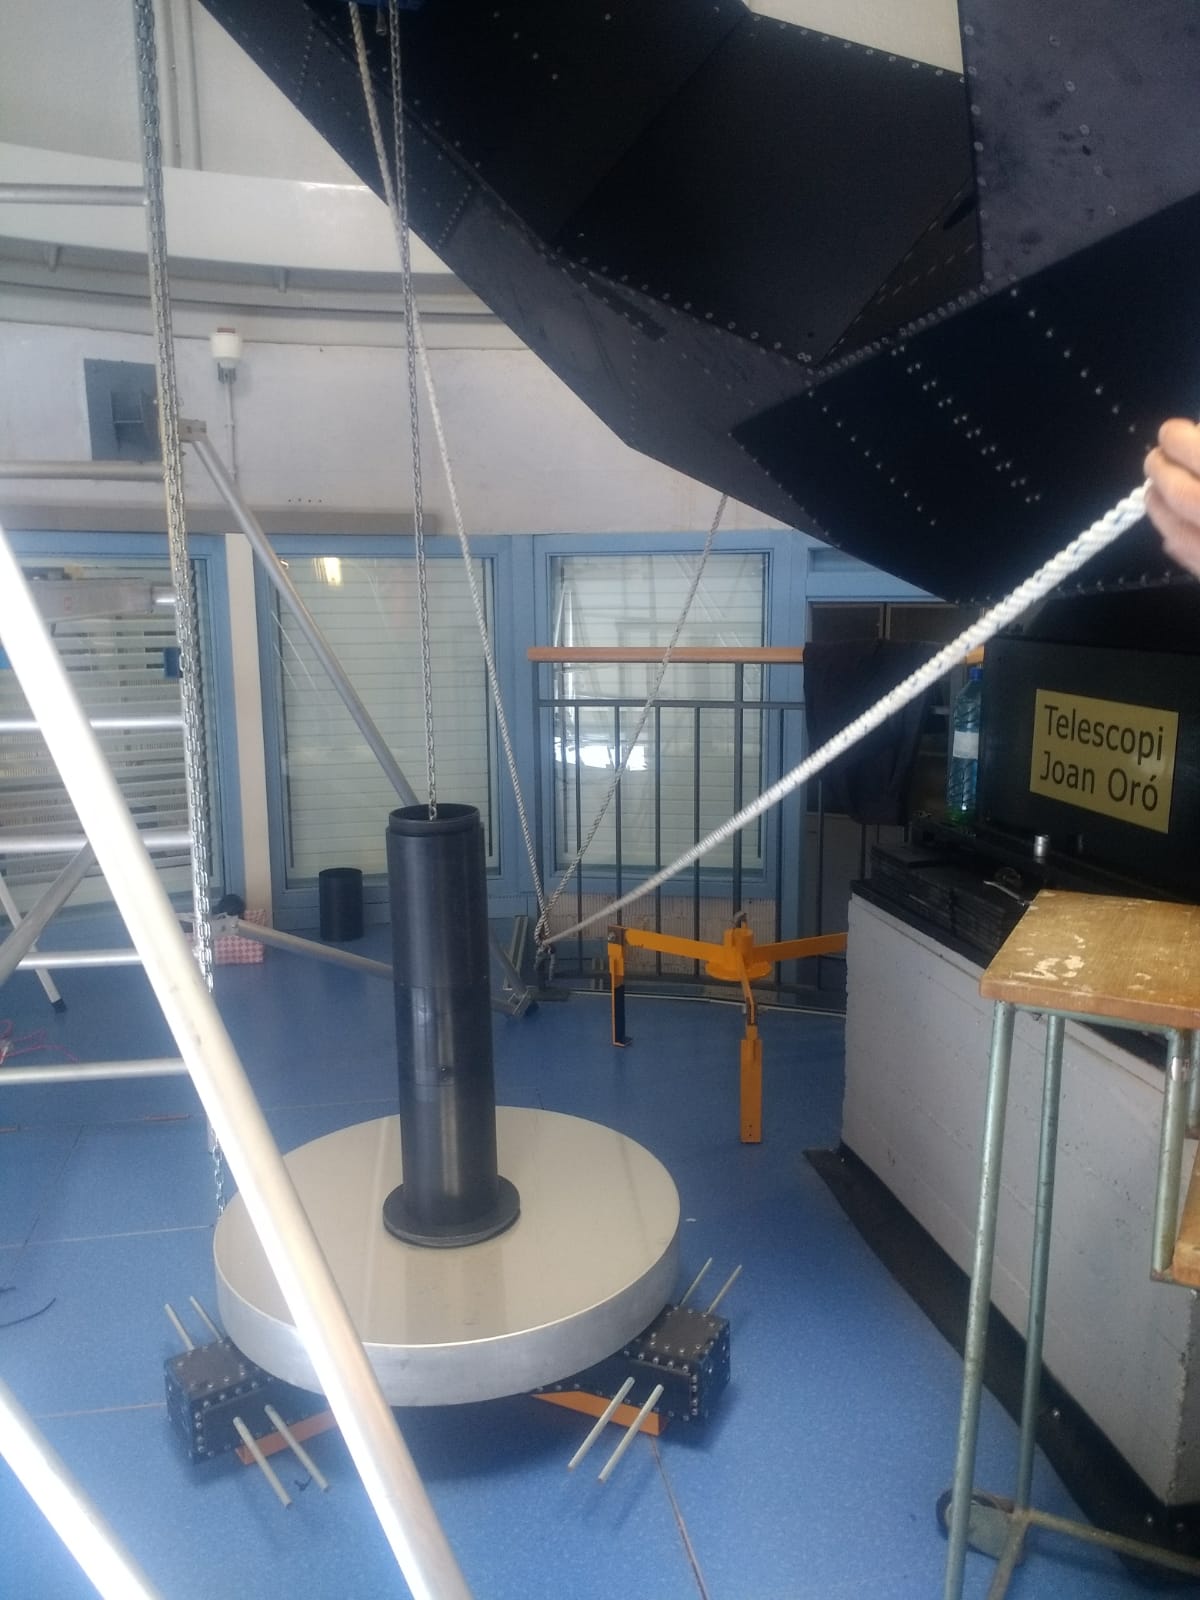 New aluminization of the mirror of the Joan Oró telescope